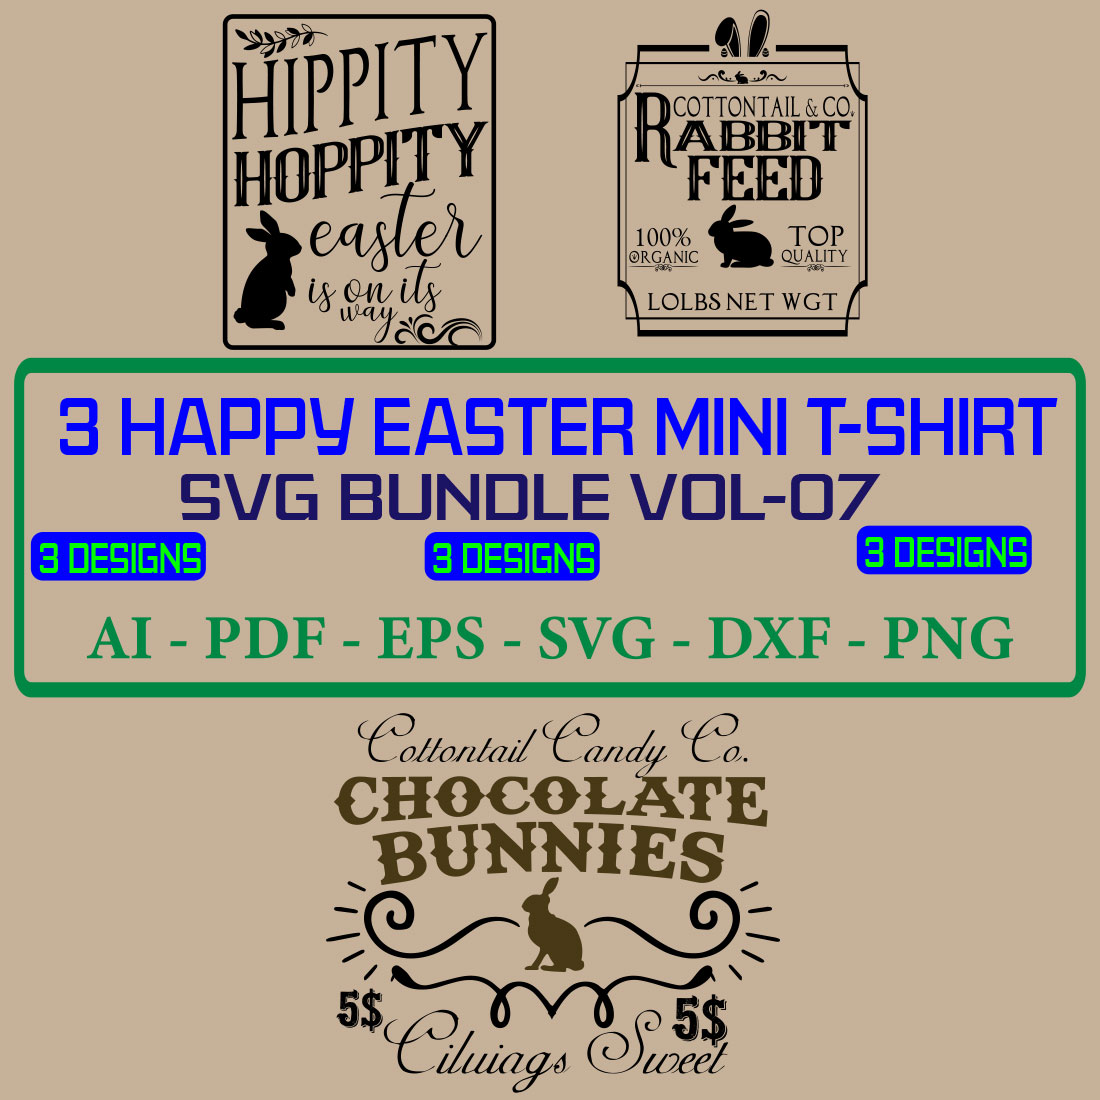 3 Happy Easter Mini T-shirt SVG Bundle Vol 06 cover image.